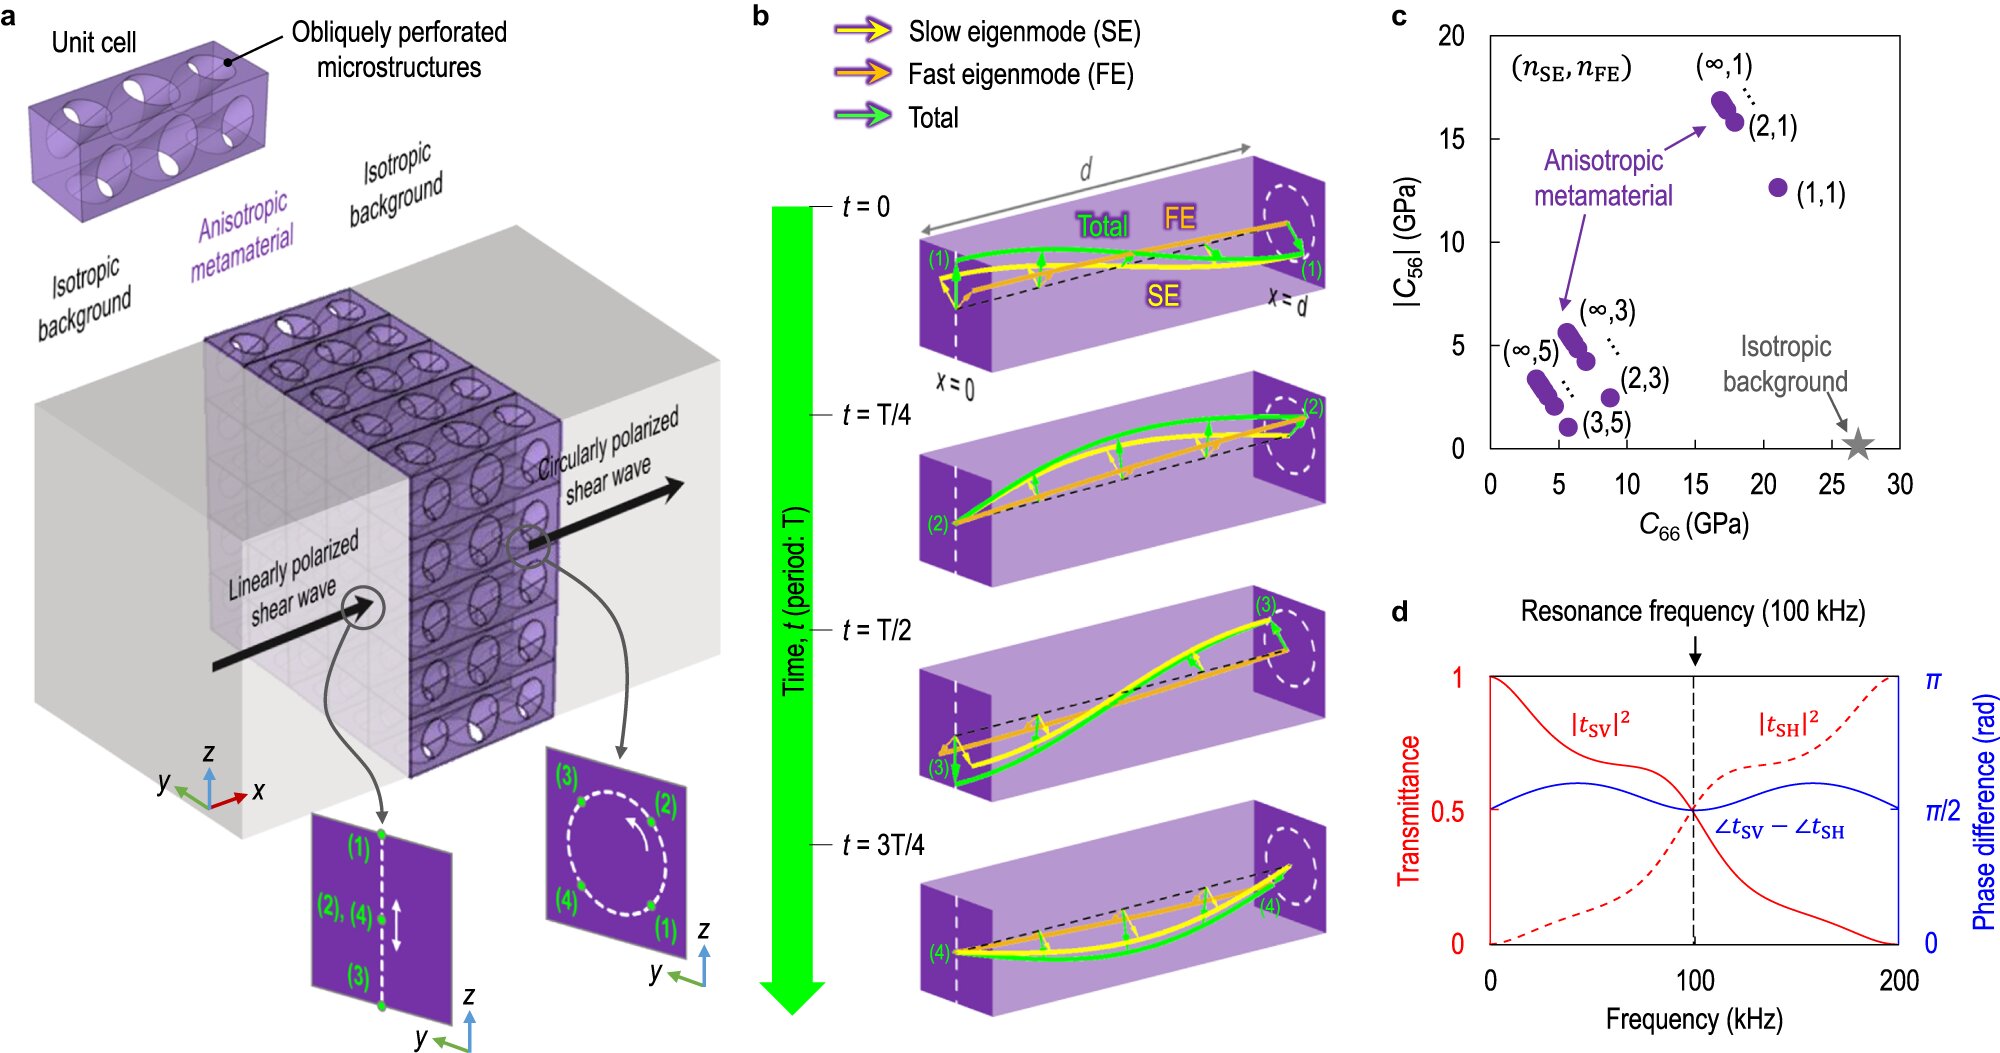 #Novel metamaterial allows ultrasound detection of hidden structural faults